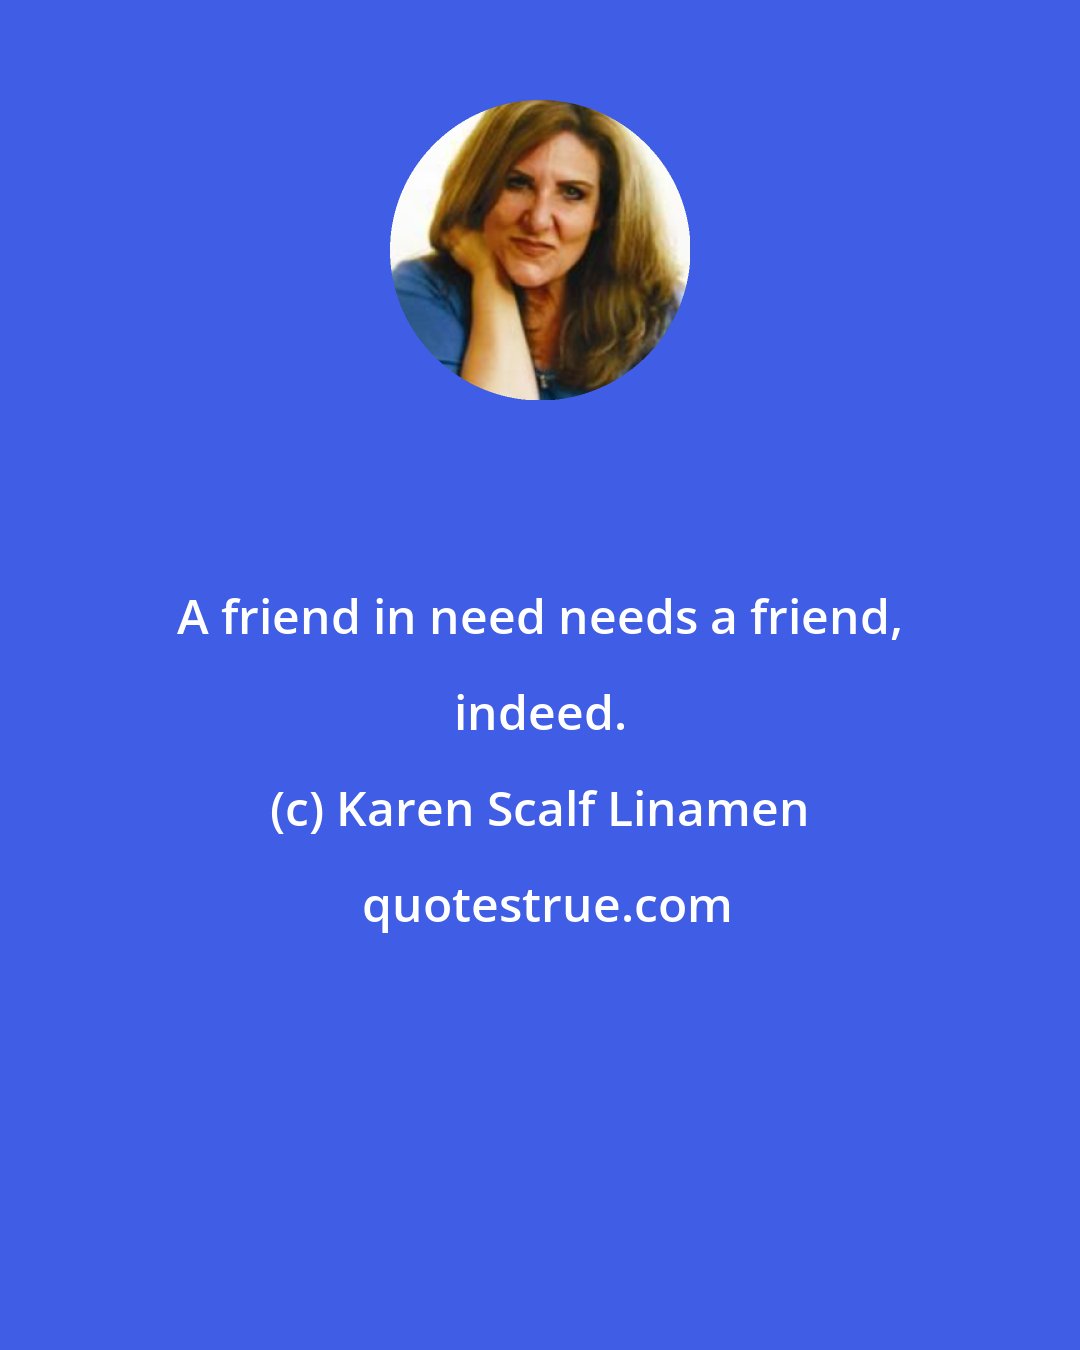 Karen Scalf Linamen: A friend in need needs a friend, indeed.